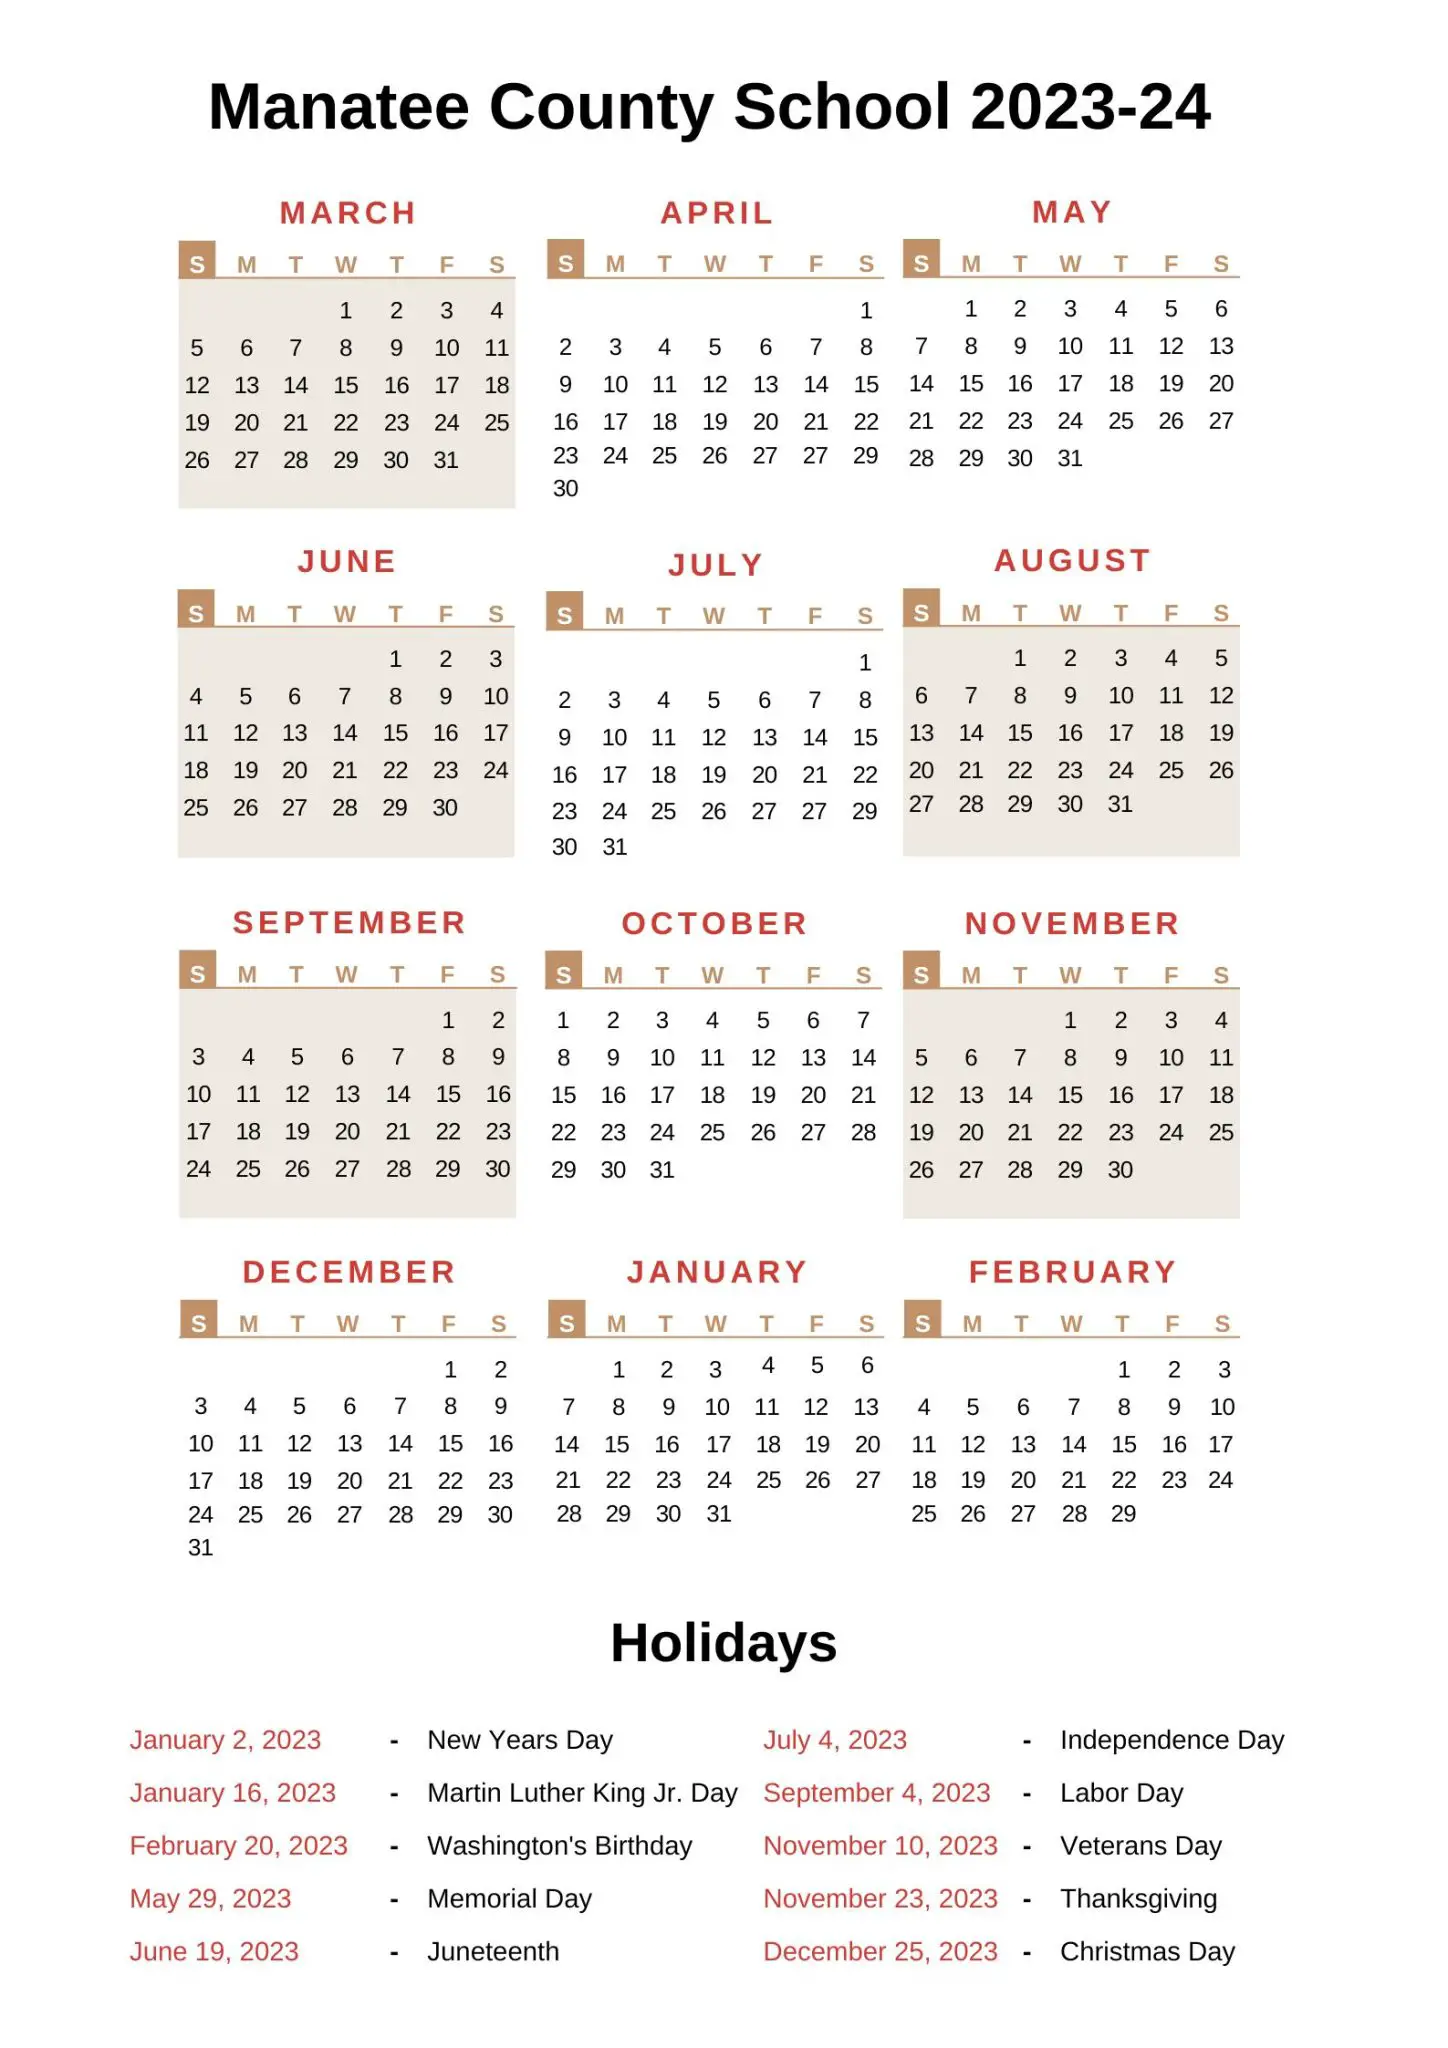 Manatee County School Calendar with Holidays 2022-2023